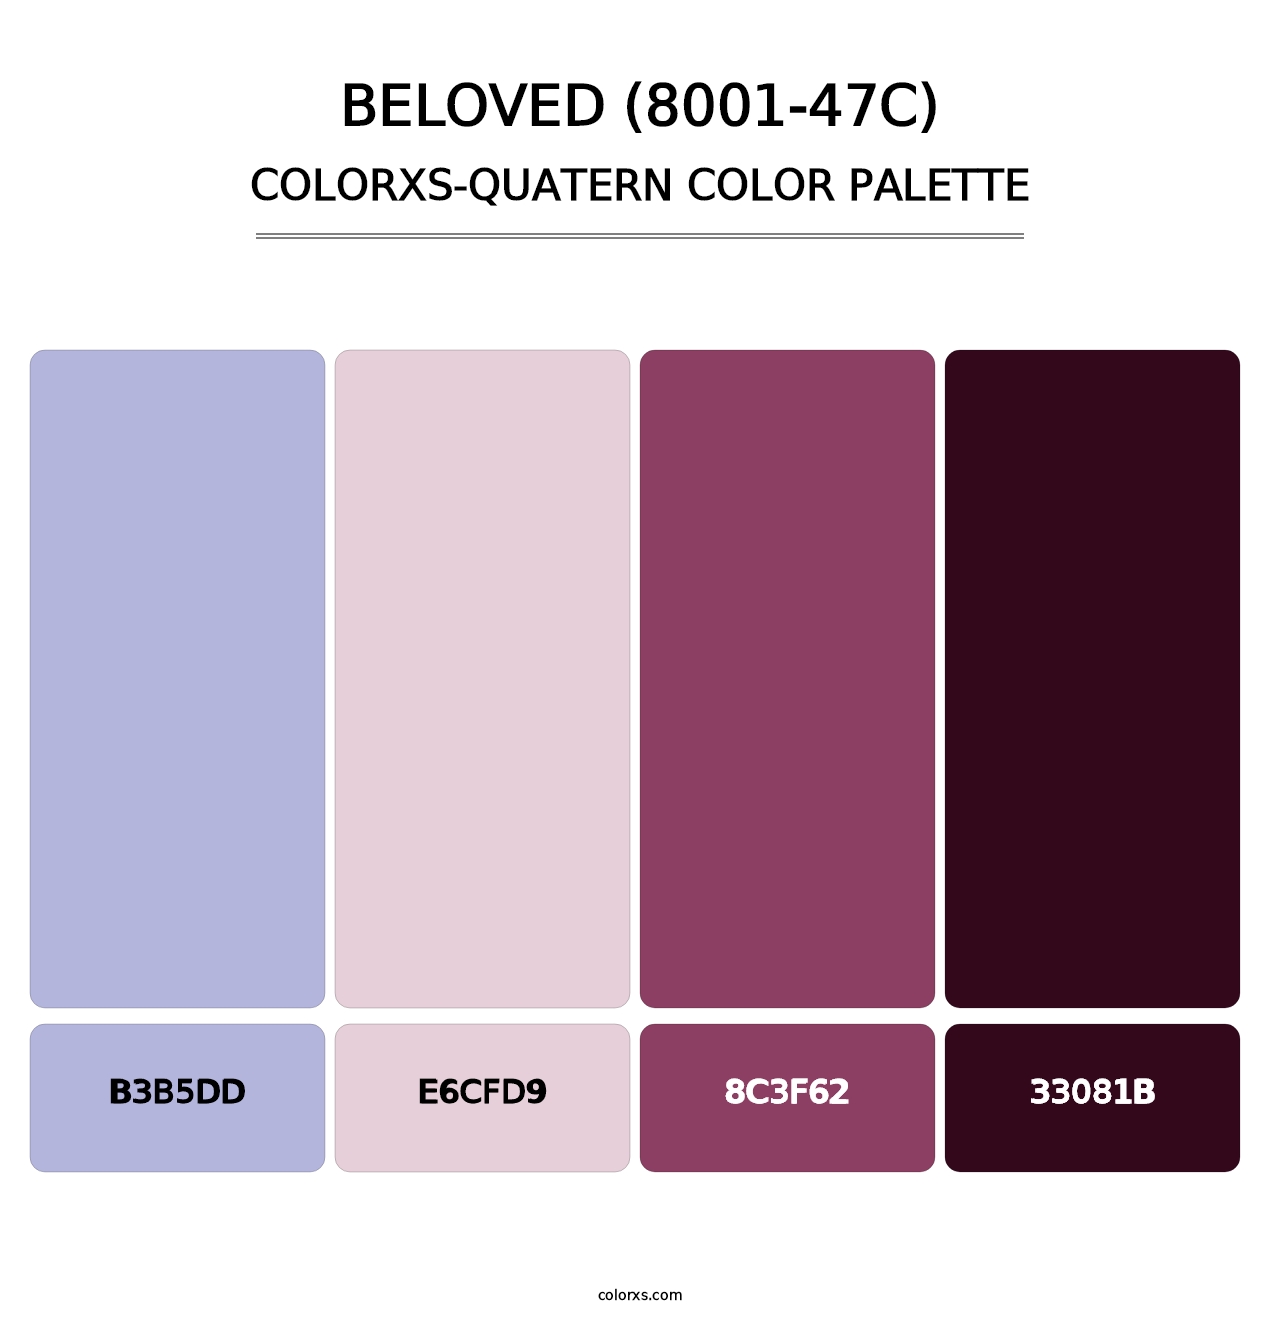 Beloved (8001-47C) - Colorxs Quatern Palette